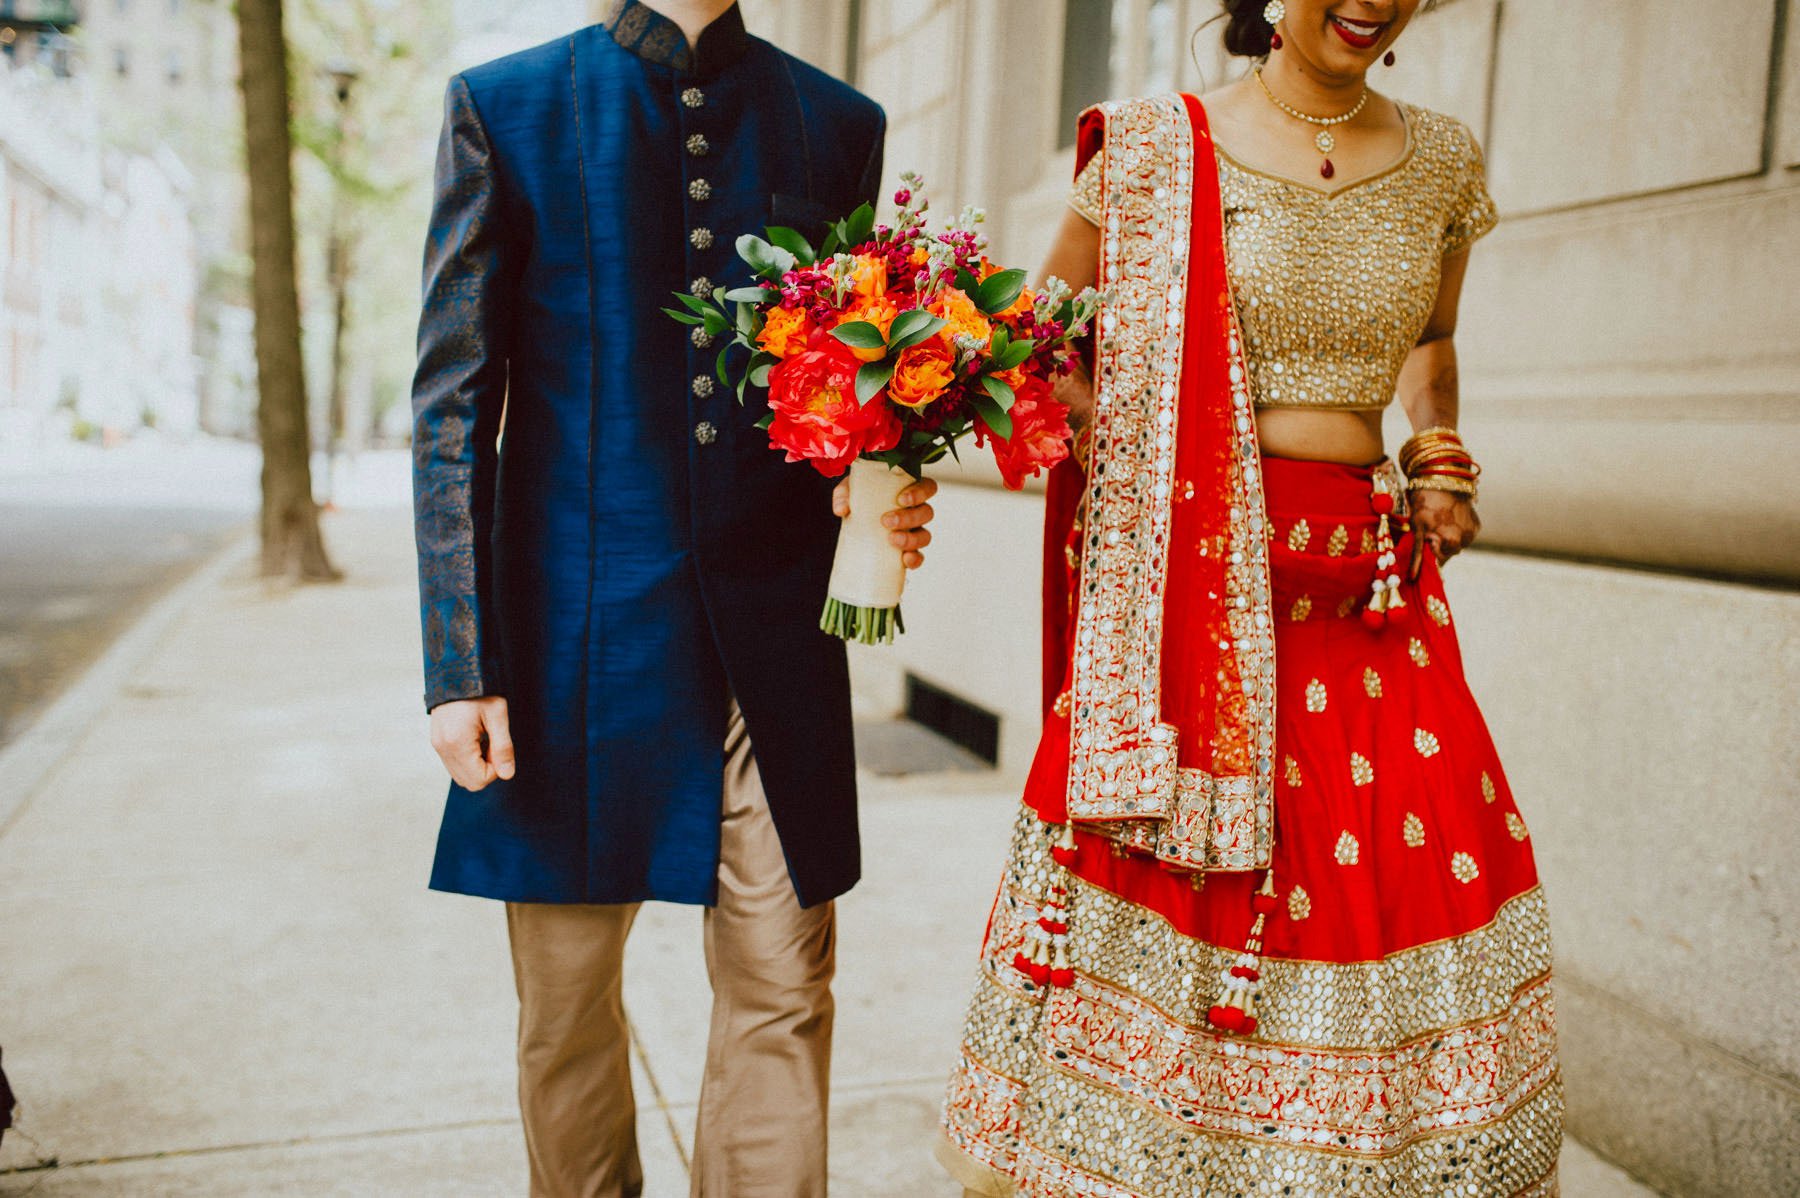 vie-philadelphia-indian-wedding-42.jpg